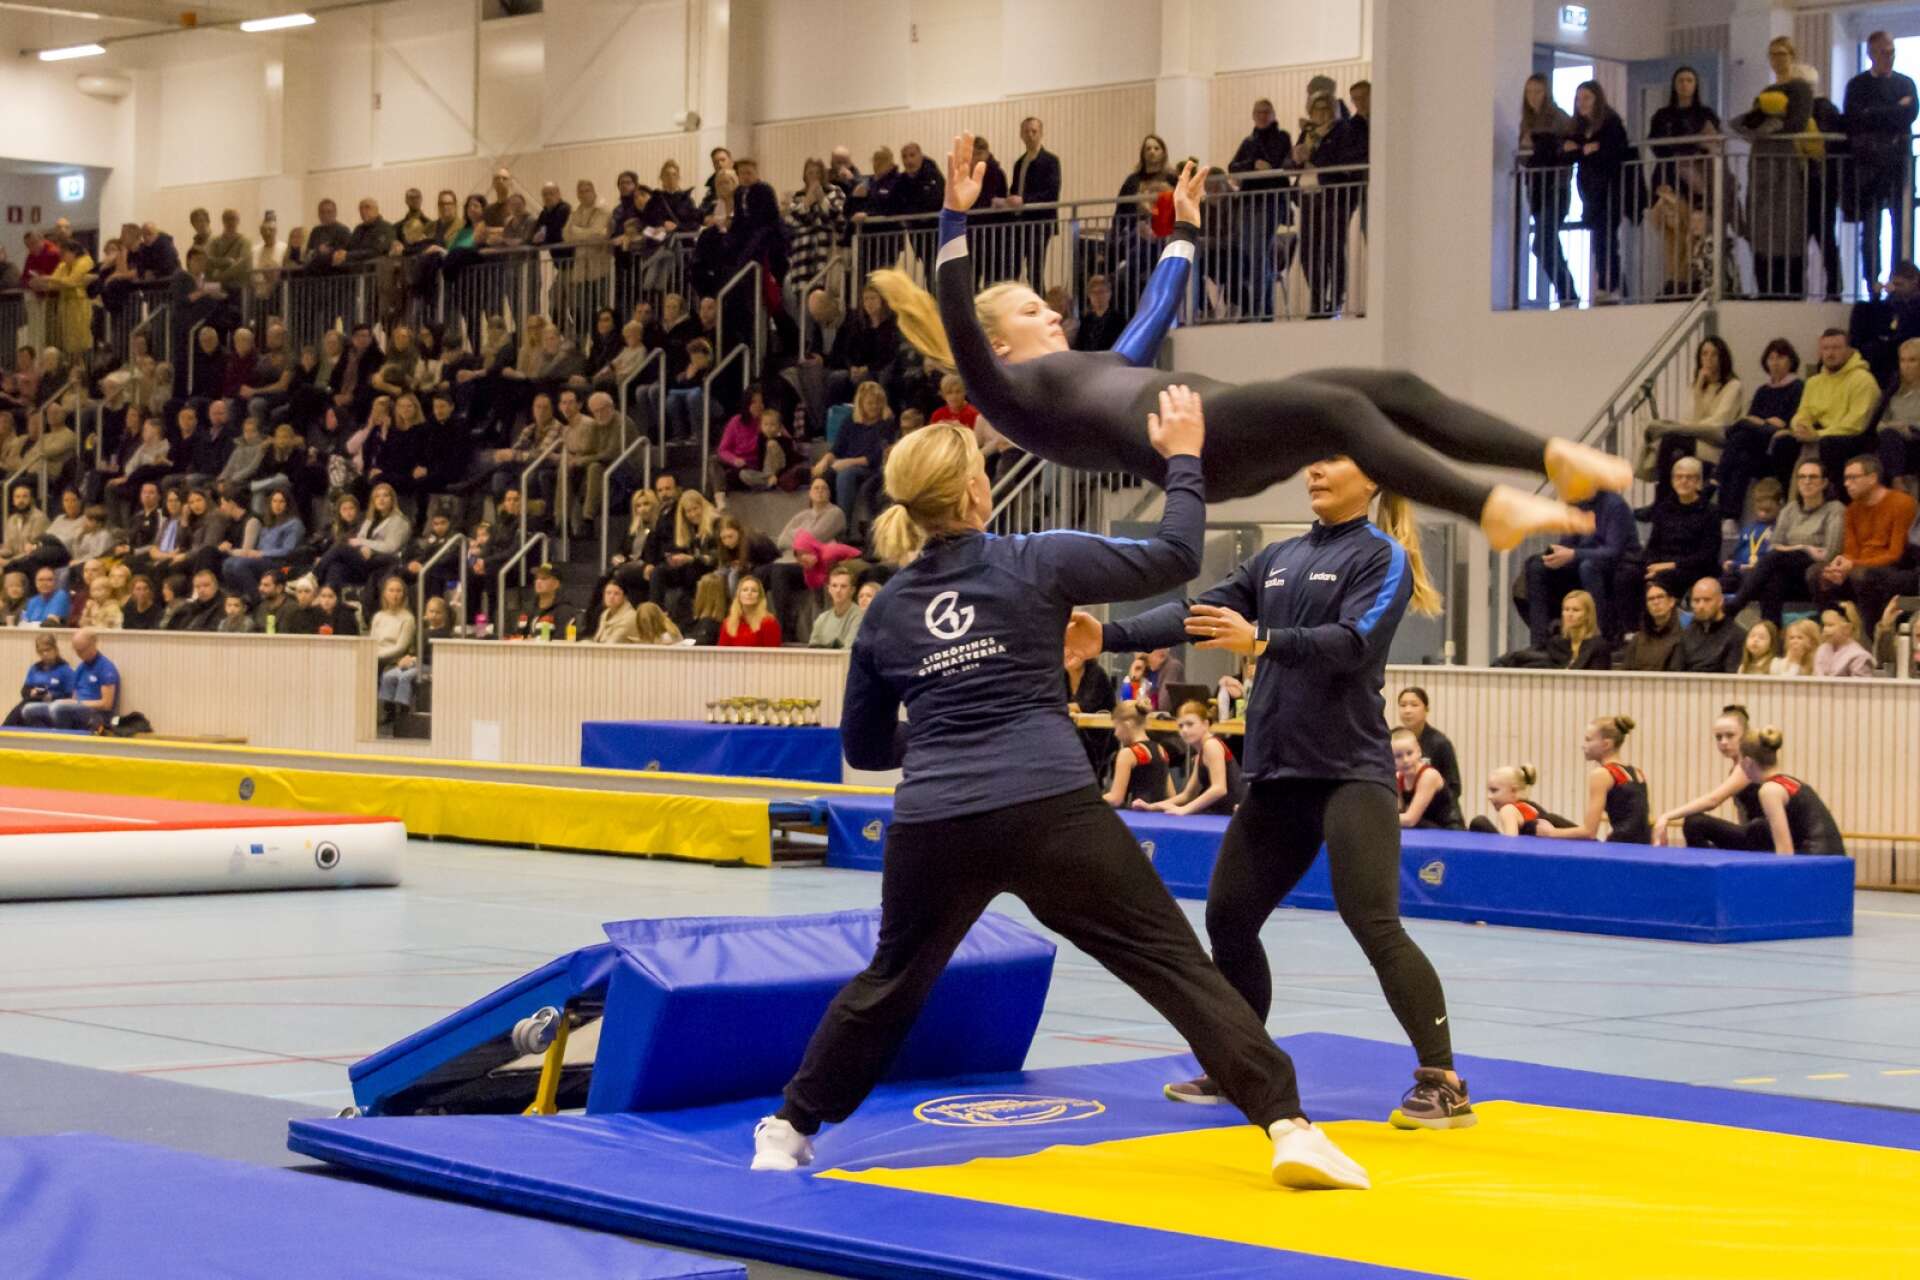 Skaraborgscupen i truppgymnastik hölls i Kavelbrohallen under lördagen.